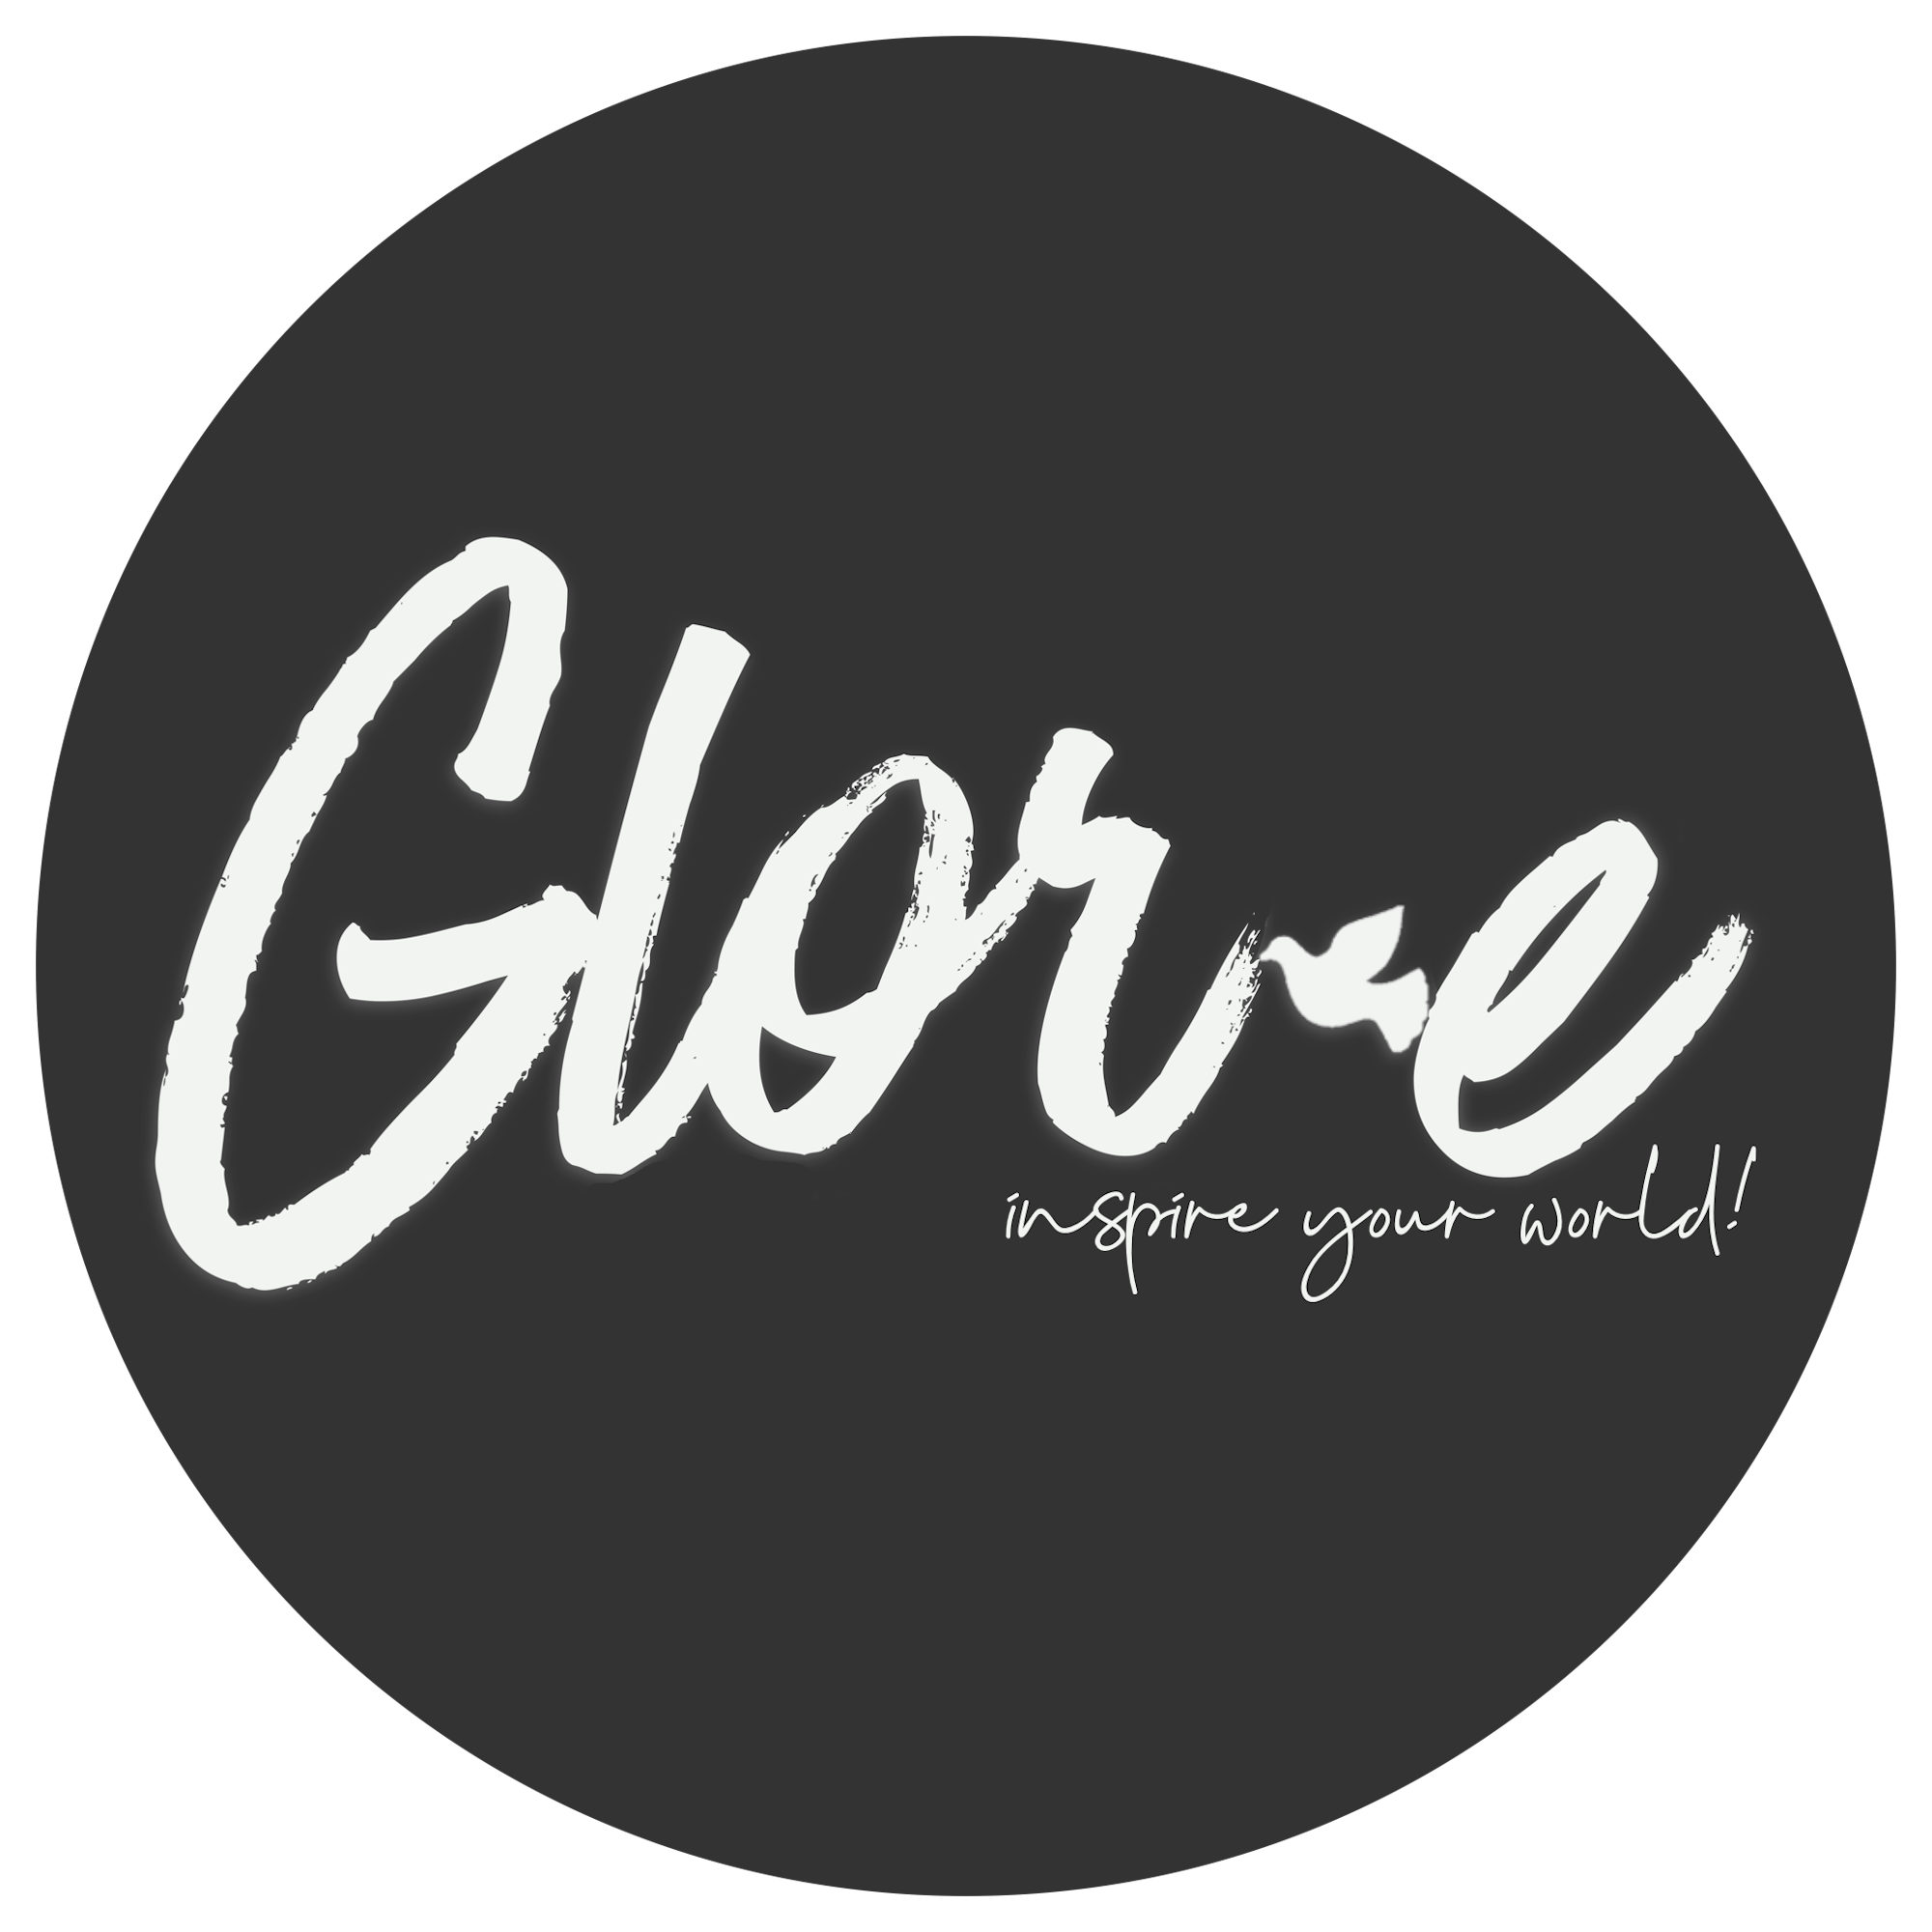 Glor-e Community